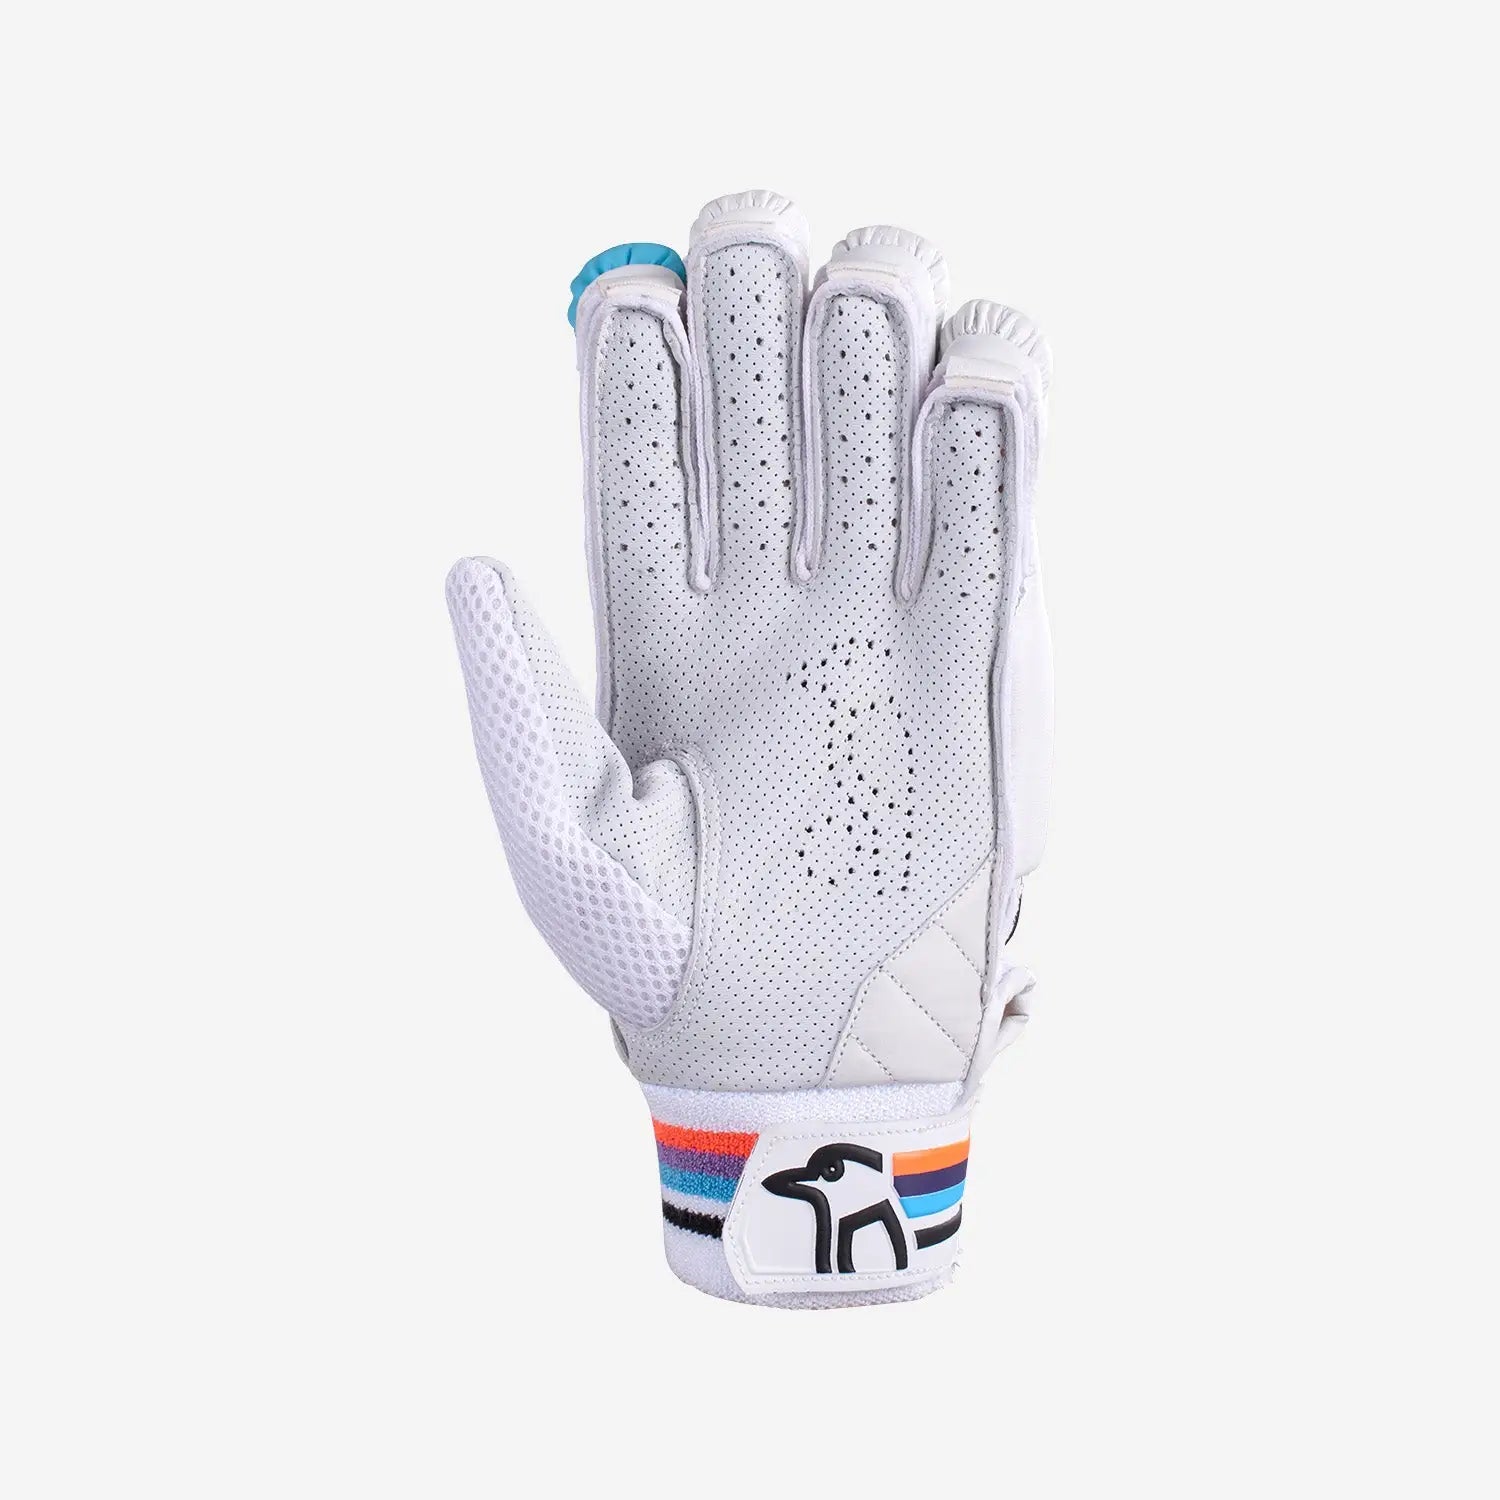 Kookaburra AURA 4.1 Cricket Batting Gloves Comfort and Protection - Adult RH - GLOVE - BATTING